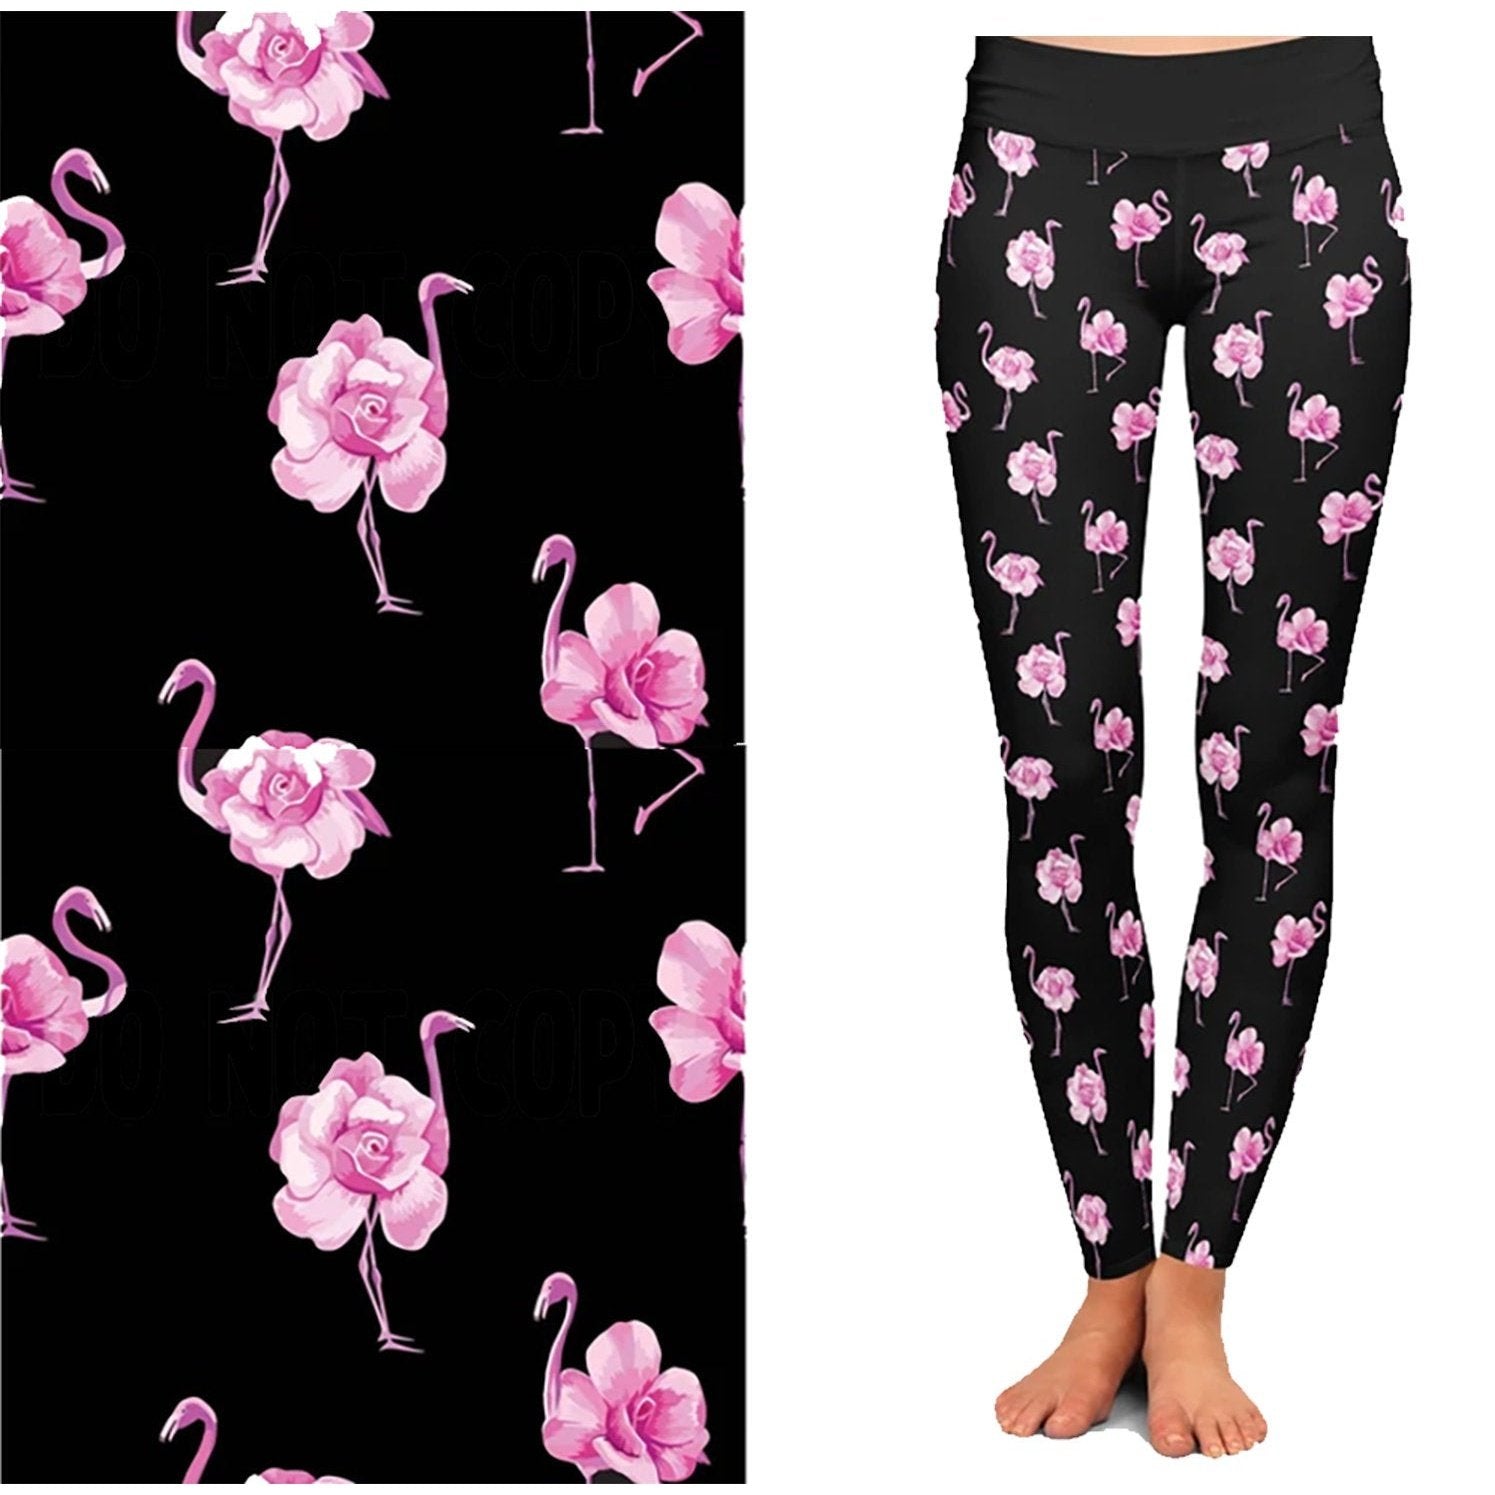 Flamingo Rose Leggings Pink Black with Pockets - Capri Length